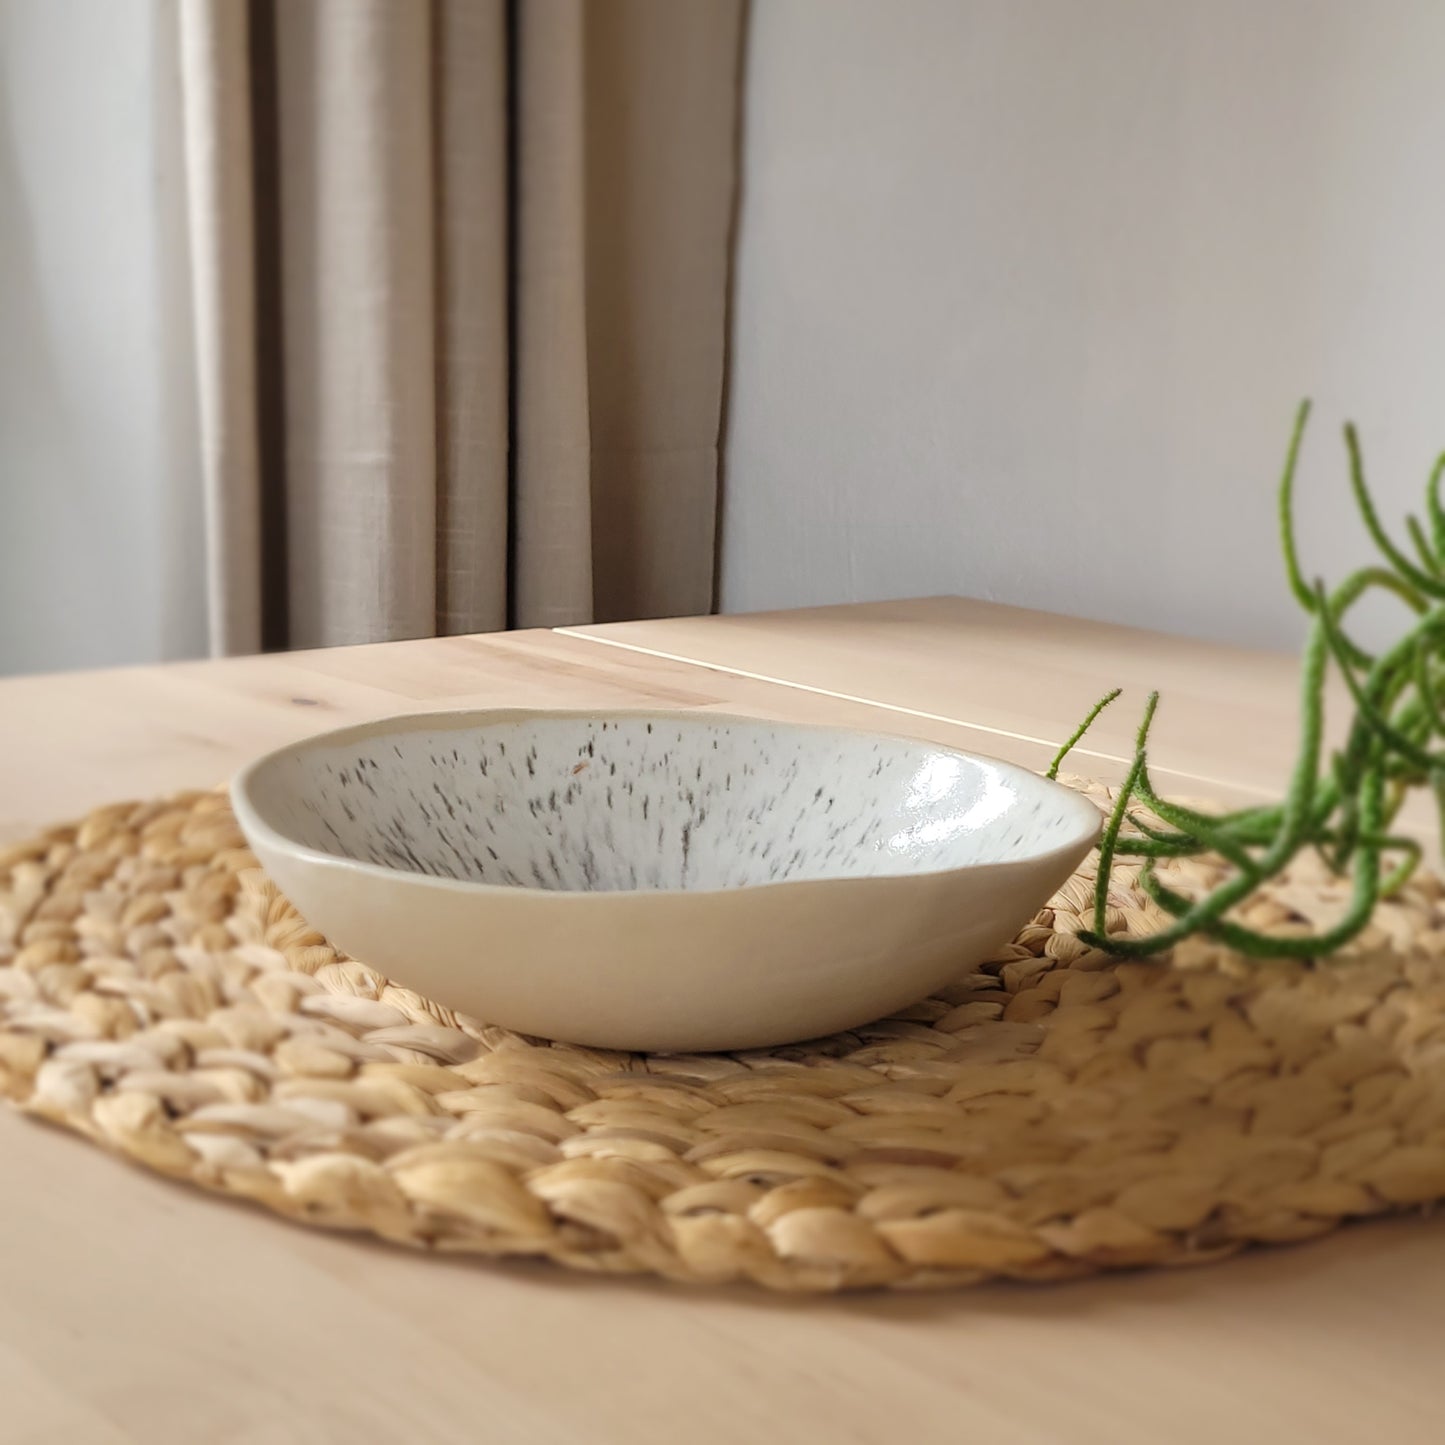 Ceramic serving bowl